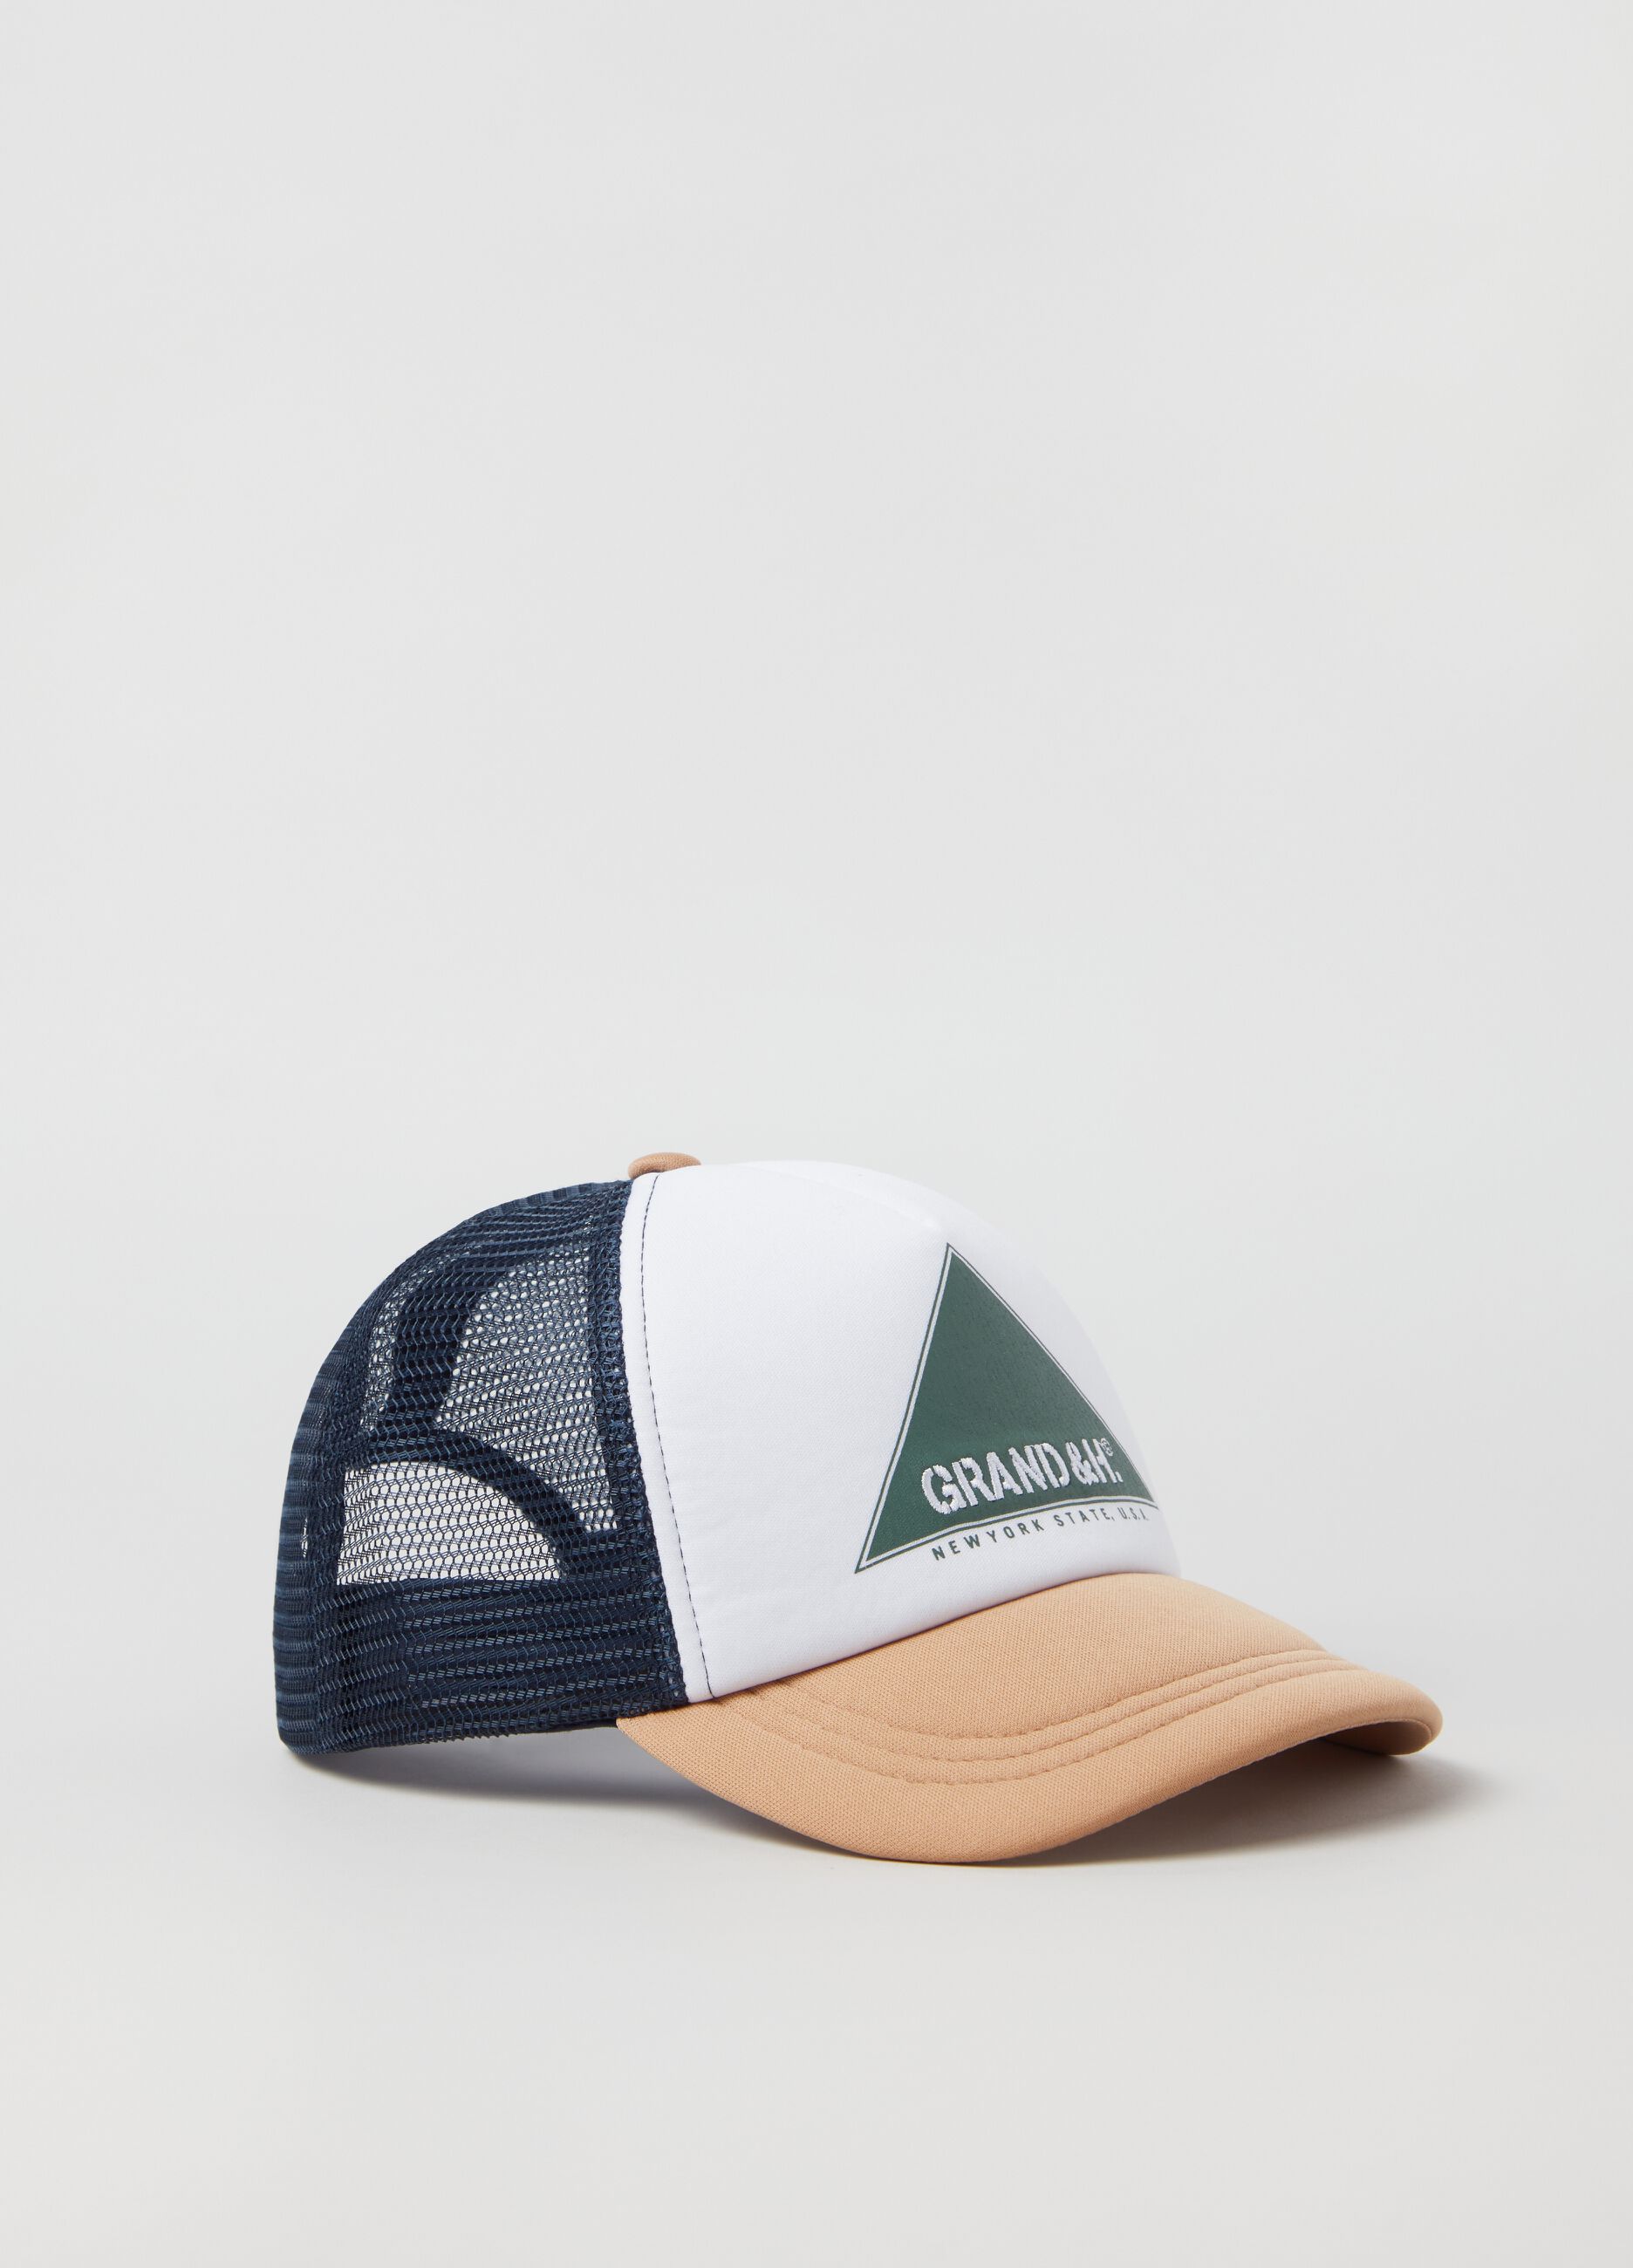 Baseball cap with mesh back and logo